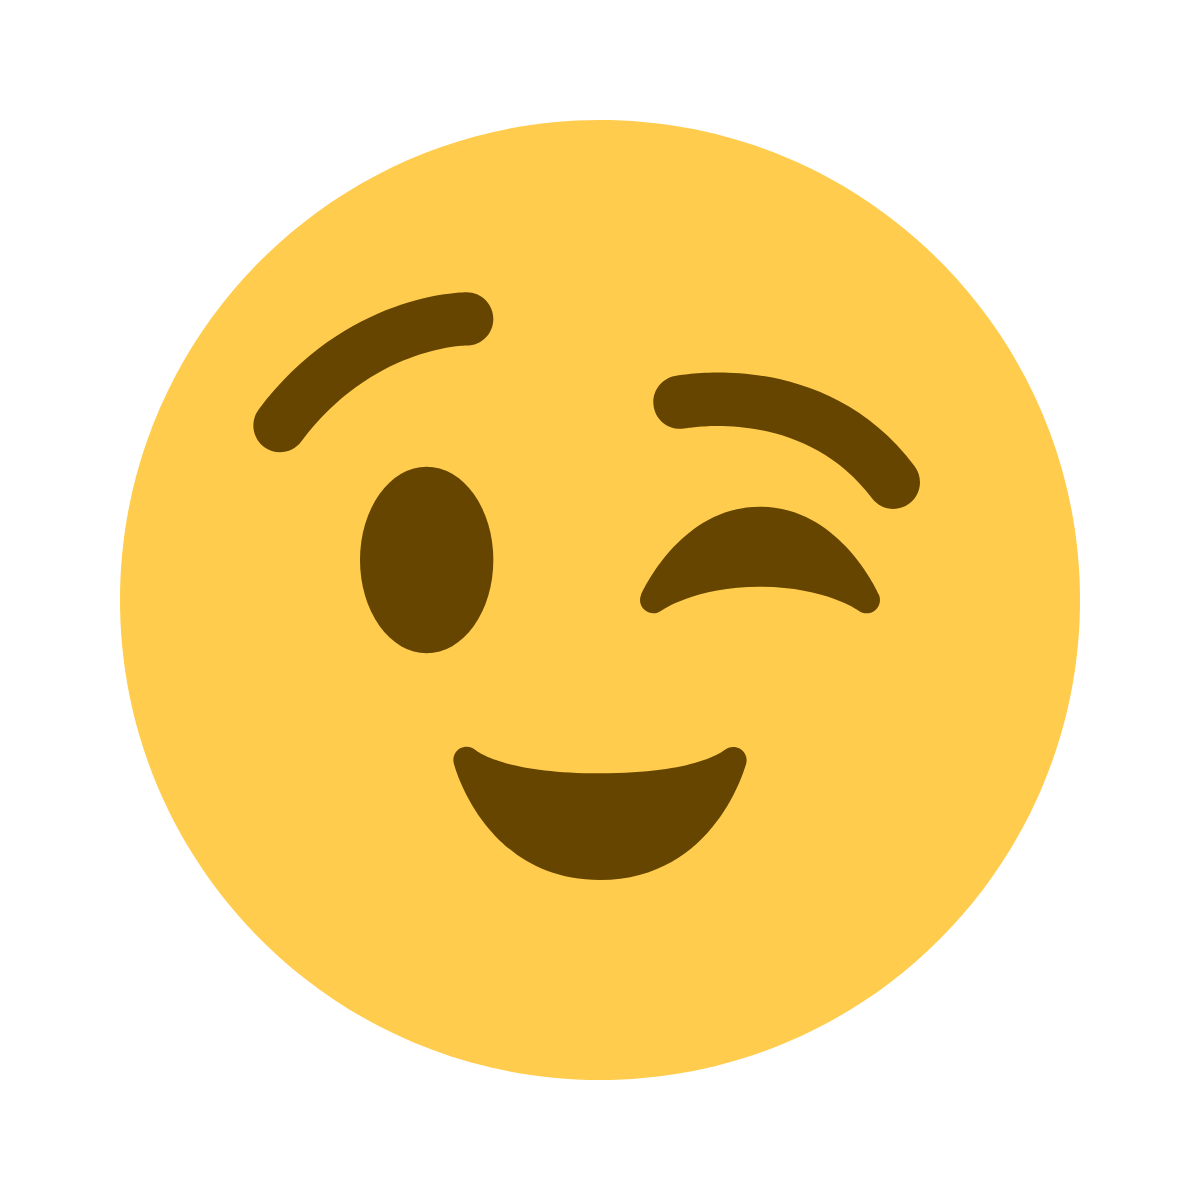 Emoticon Smiley Wink Emoji Clip Art Emoji Png Download 80008000 Images